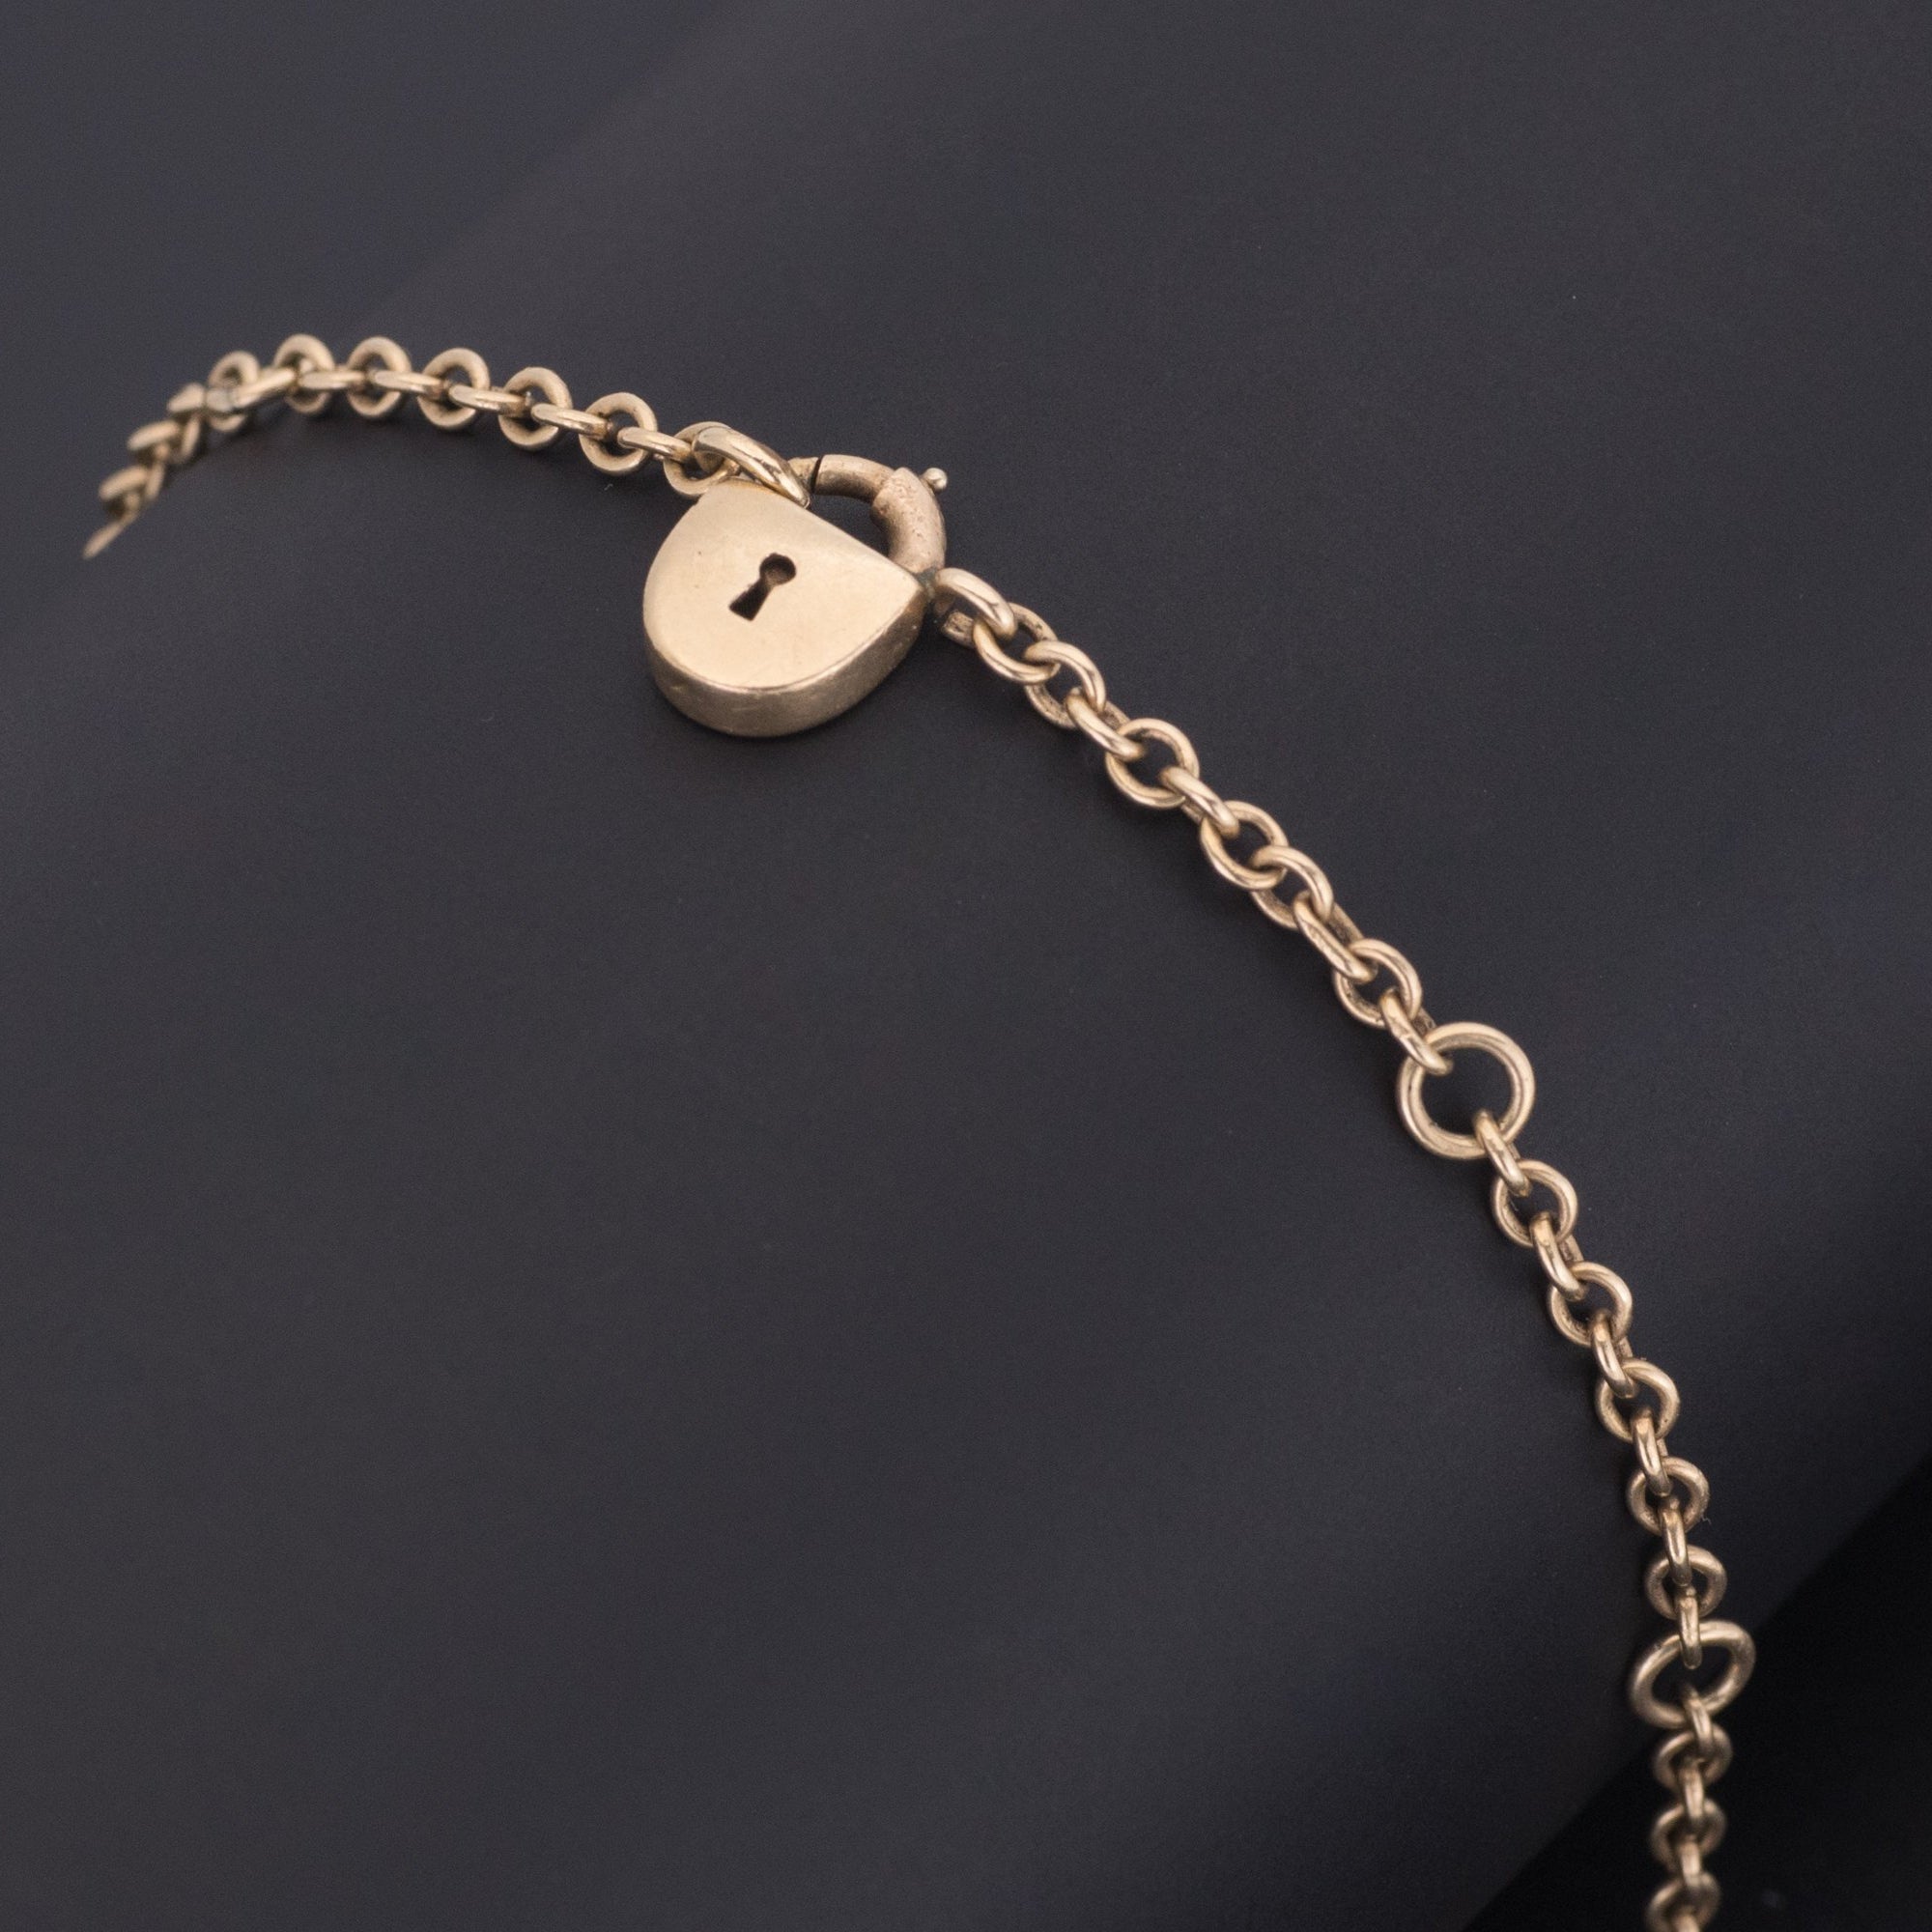 Antique Gold Bracelet | Antique Charm Bracelet | 14k Gold Bracelet | Padlock Charm Bracelet